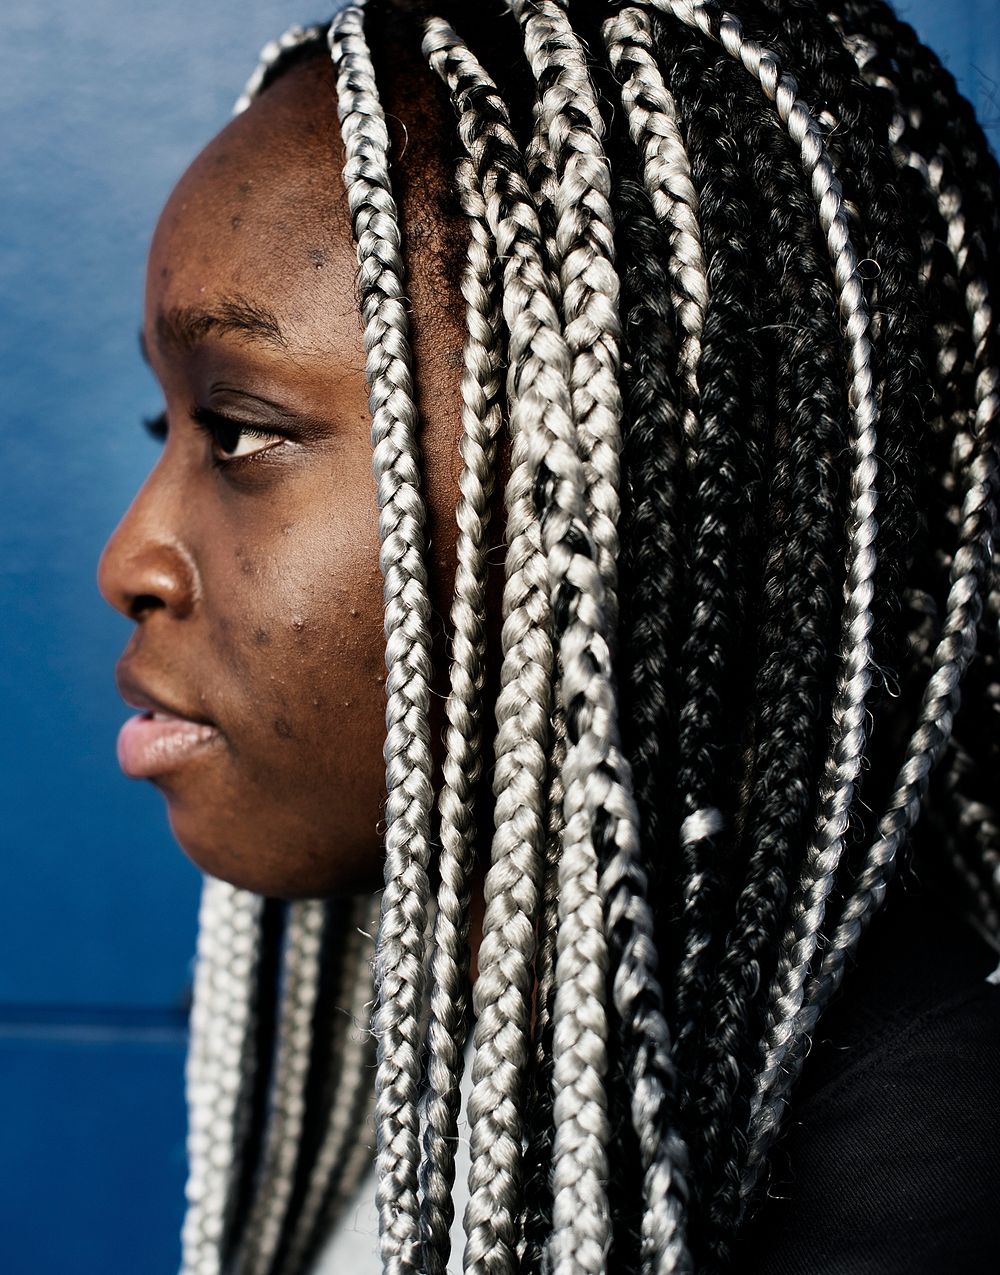 Portrait of black woman with dreadlocks hair